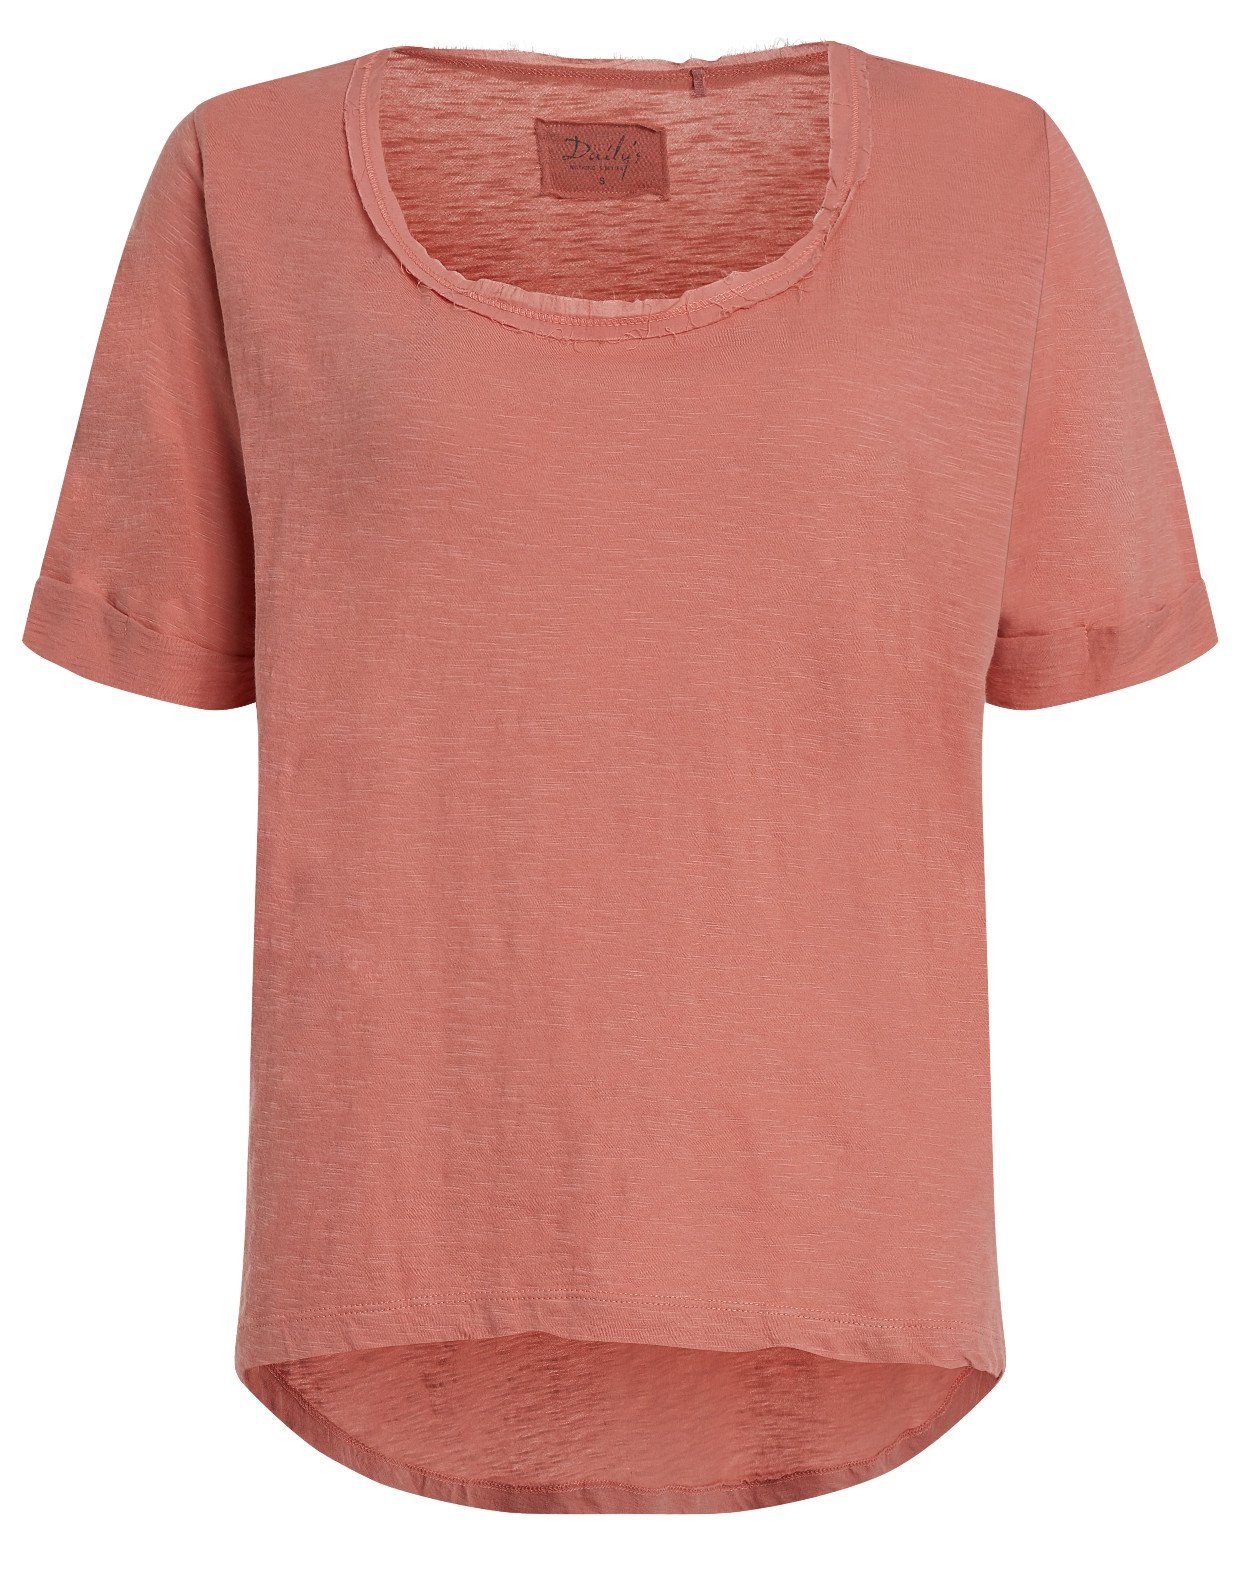 DAILY´S T-Shirt GLADIS: Backsteinfarben mit Rundhalsausschnitt Damen T-Shirt